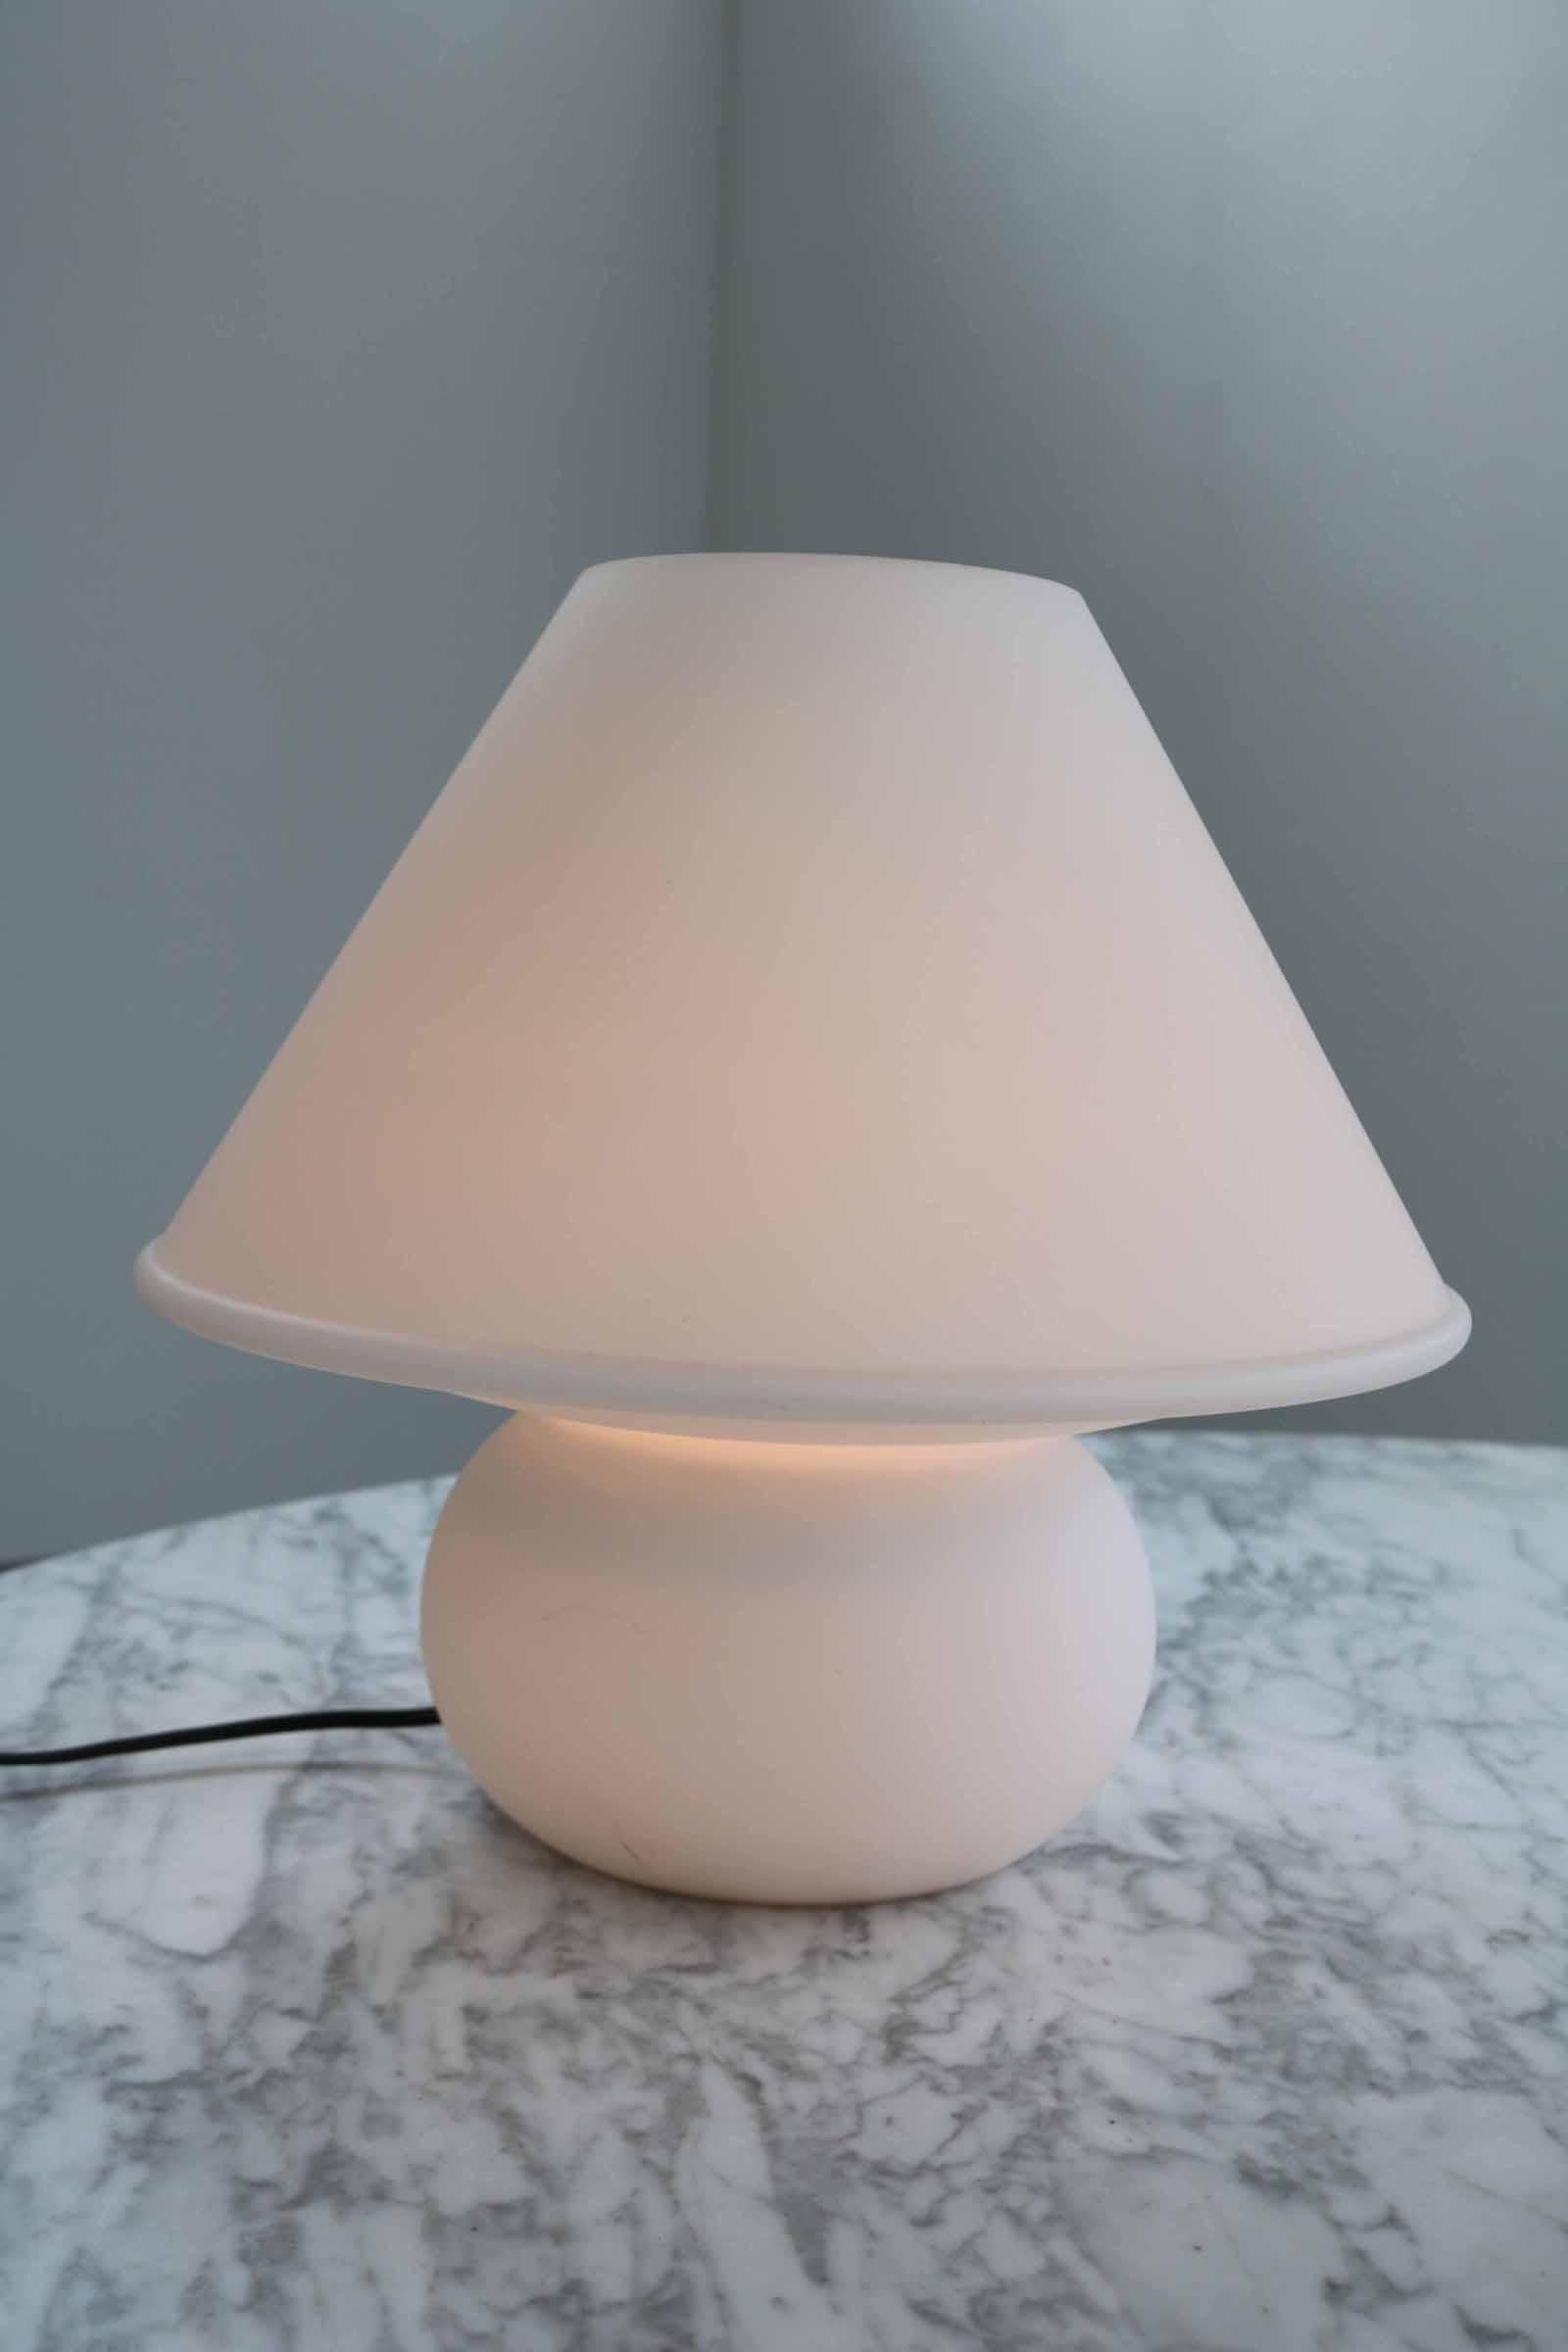 White XL mushroom table lamp by Limburg, Germany.